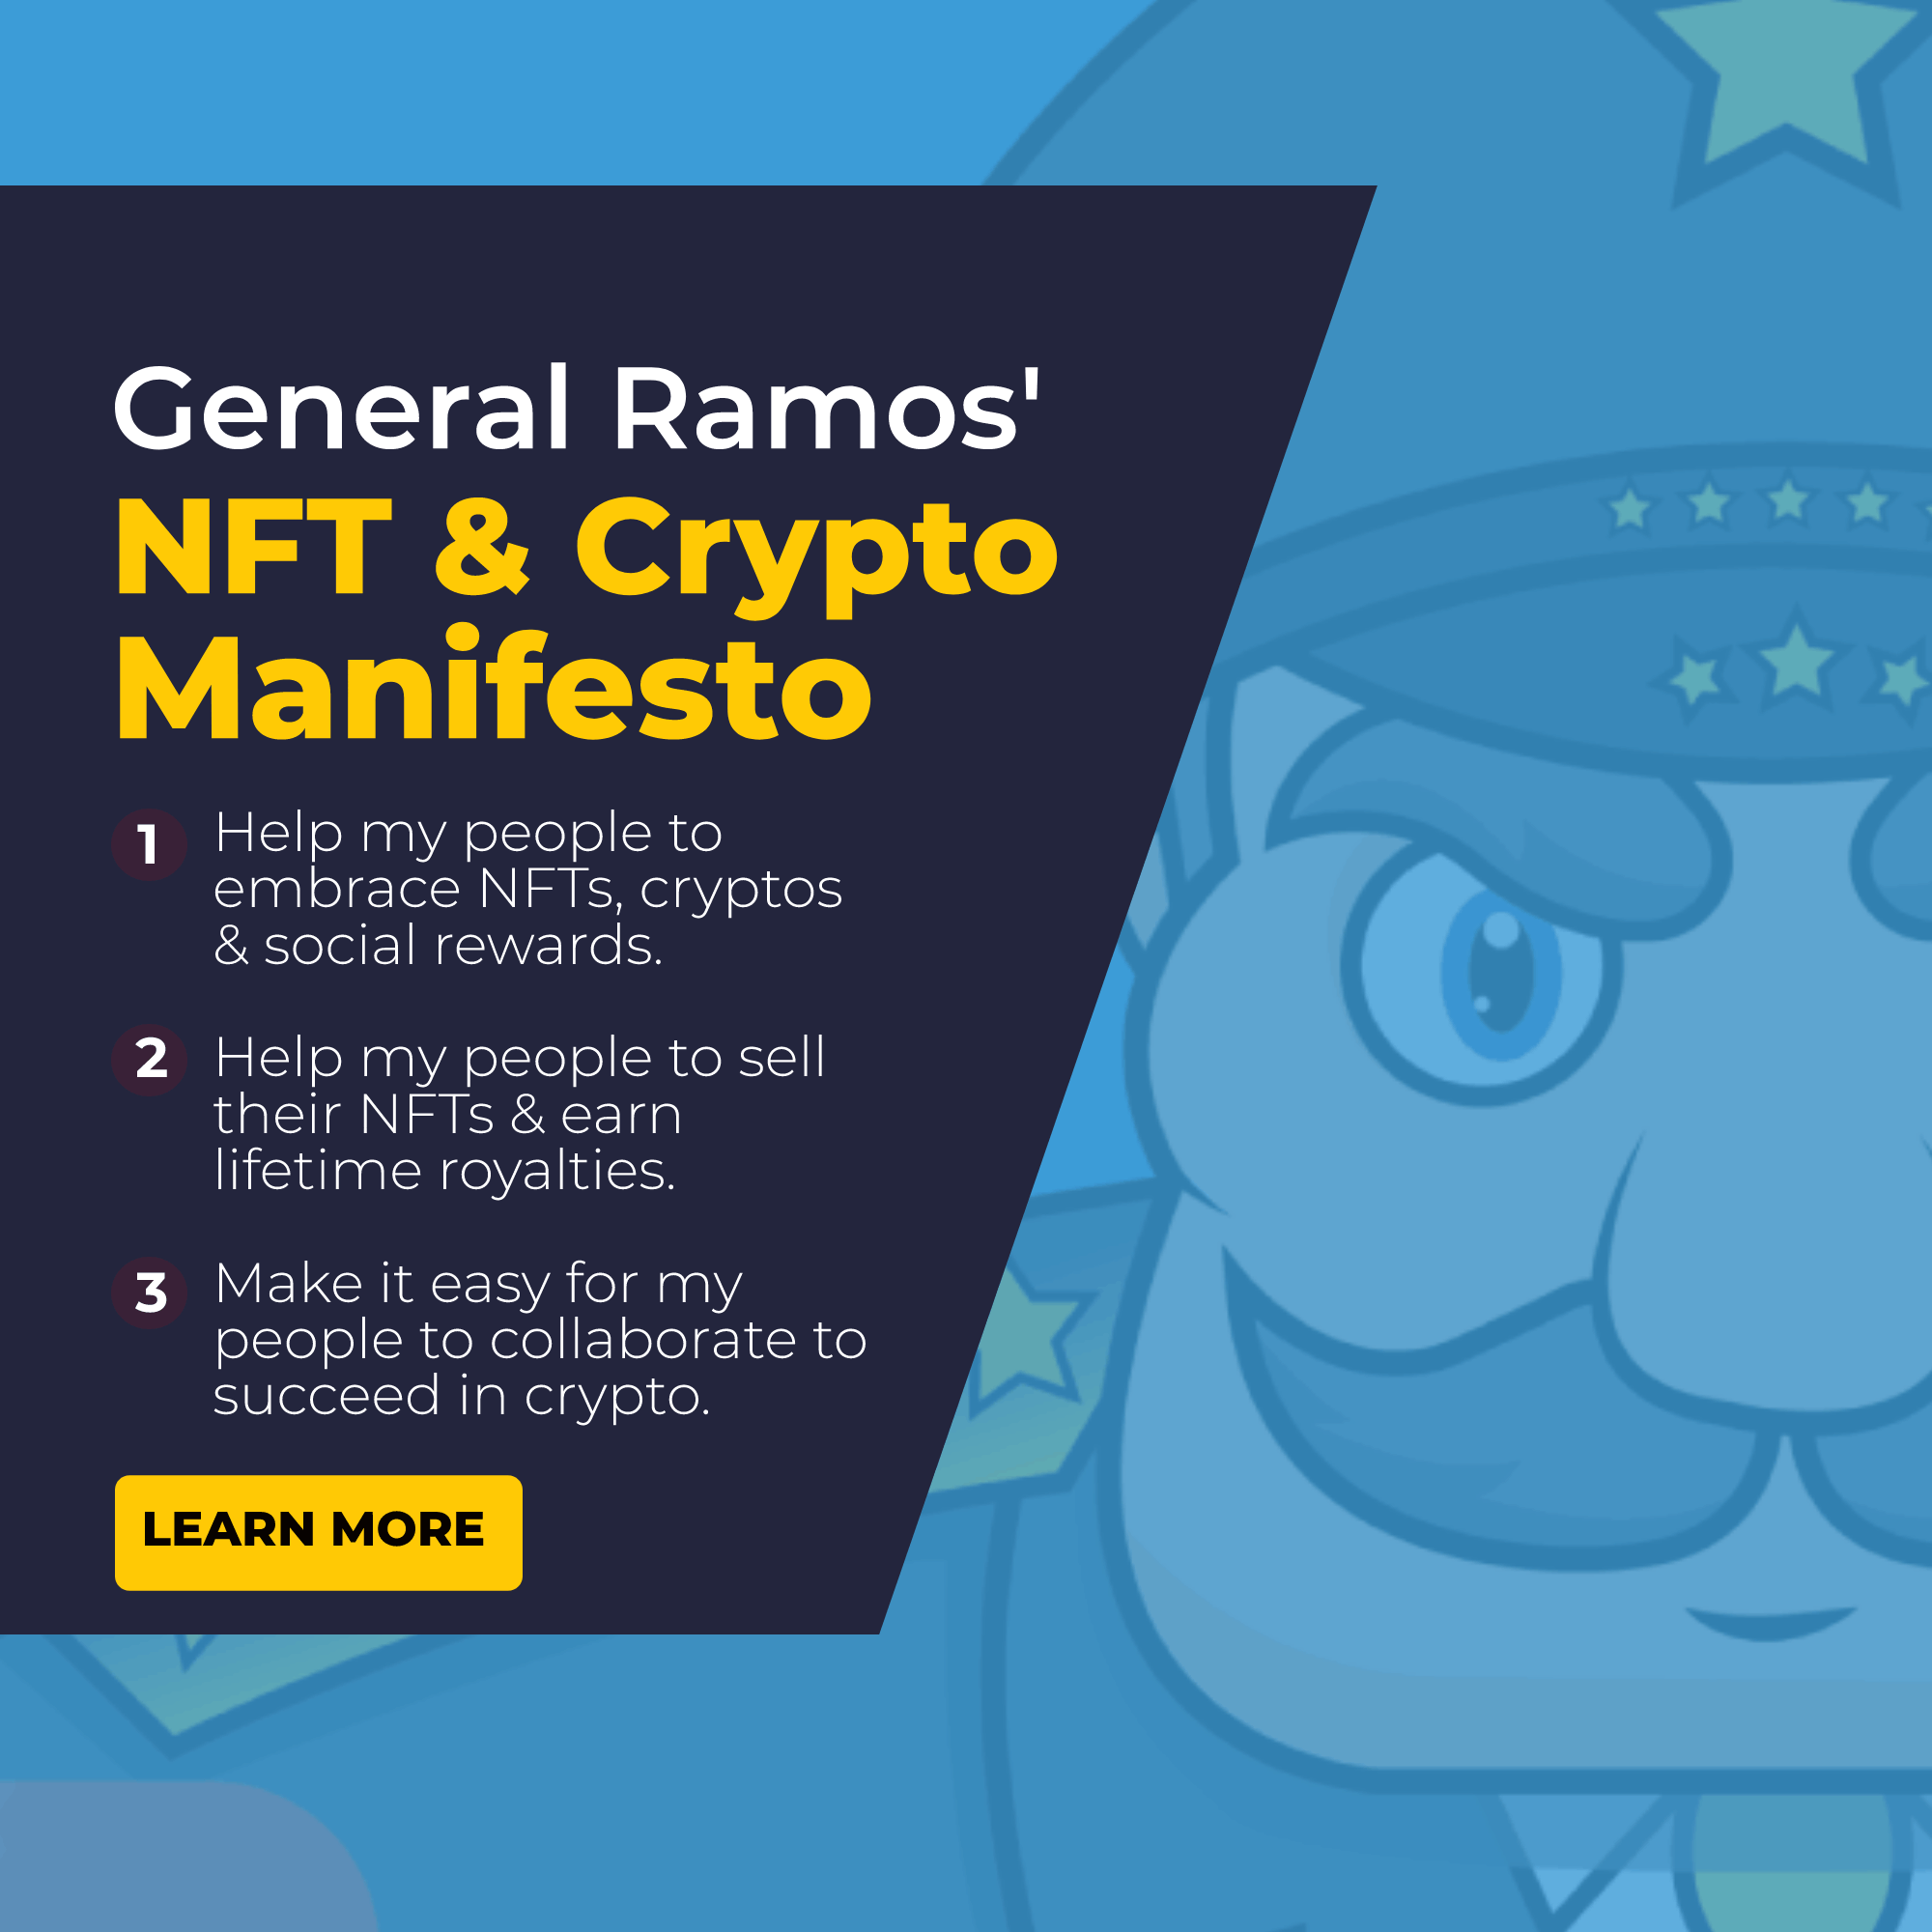 GeneralRamos manifesto149kb updated 1